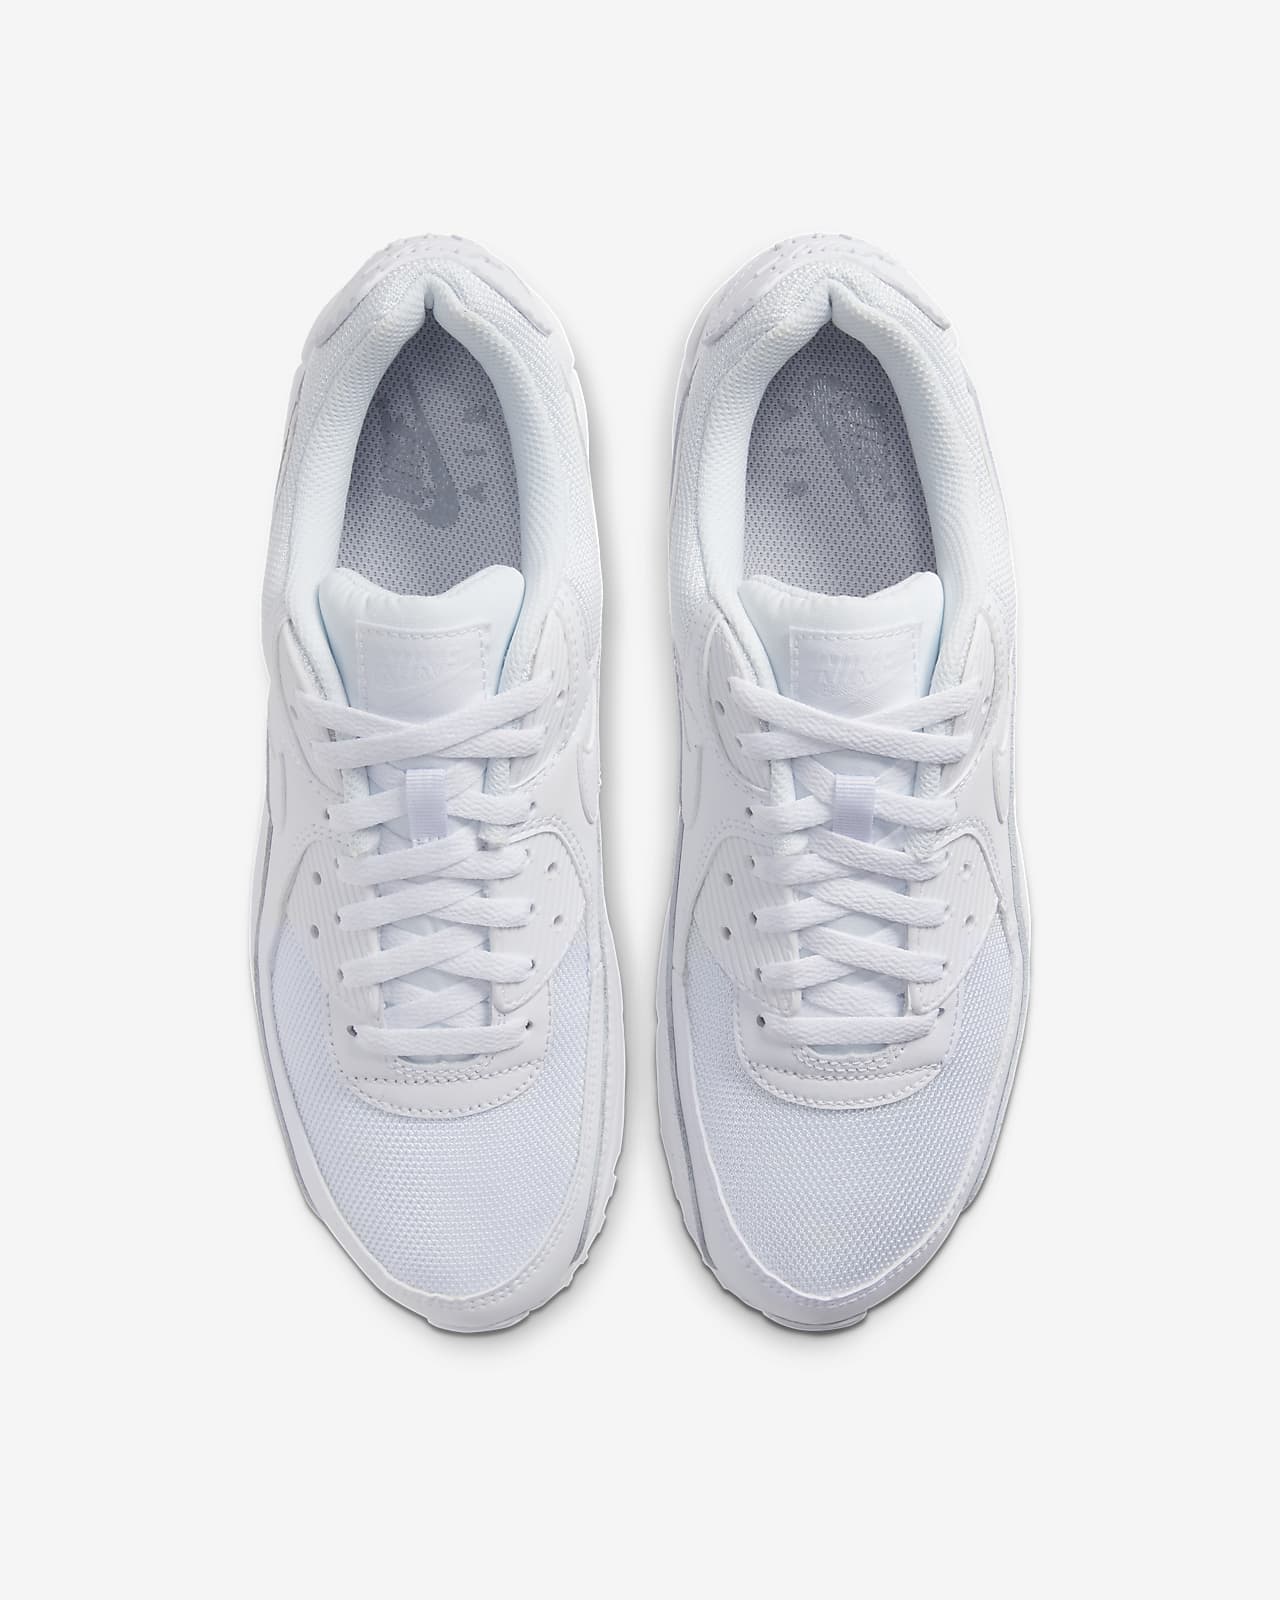 nike shoes grey white